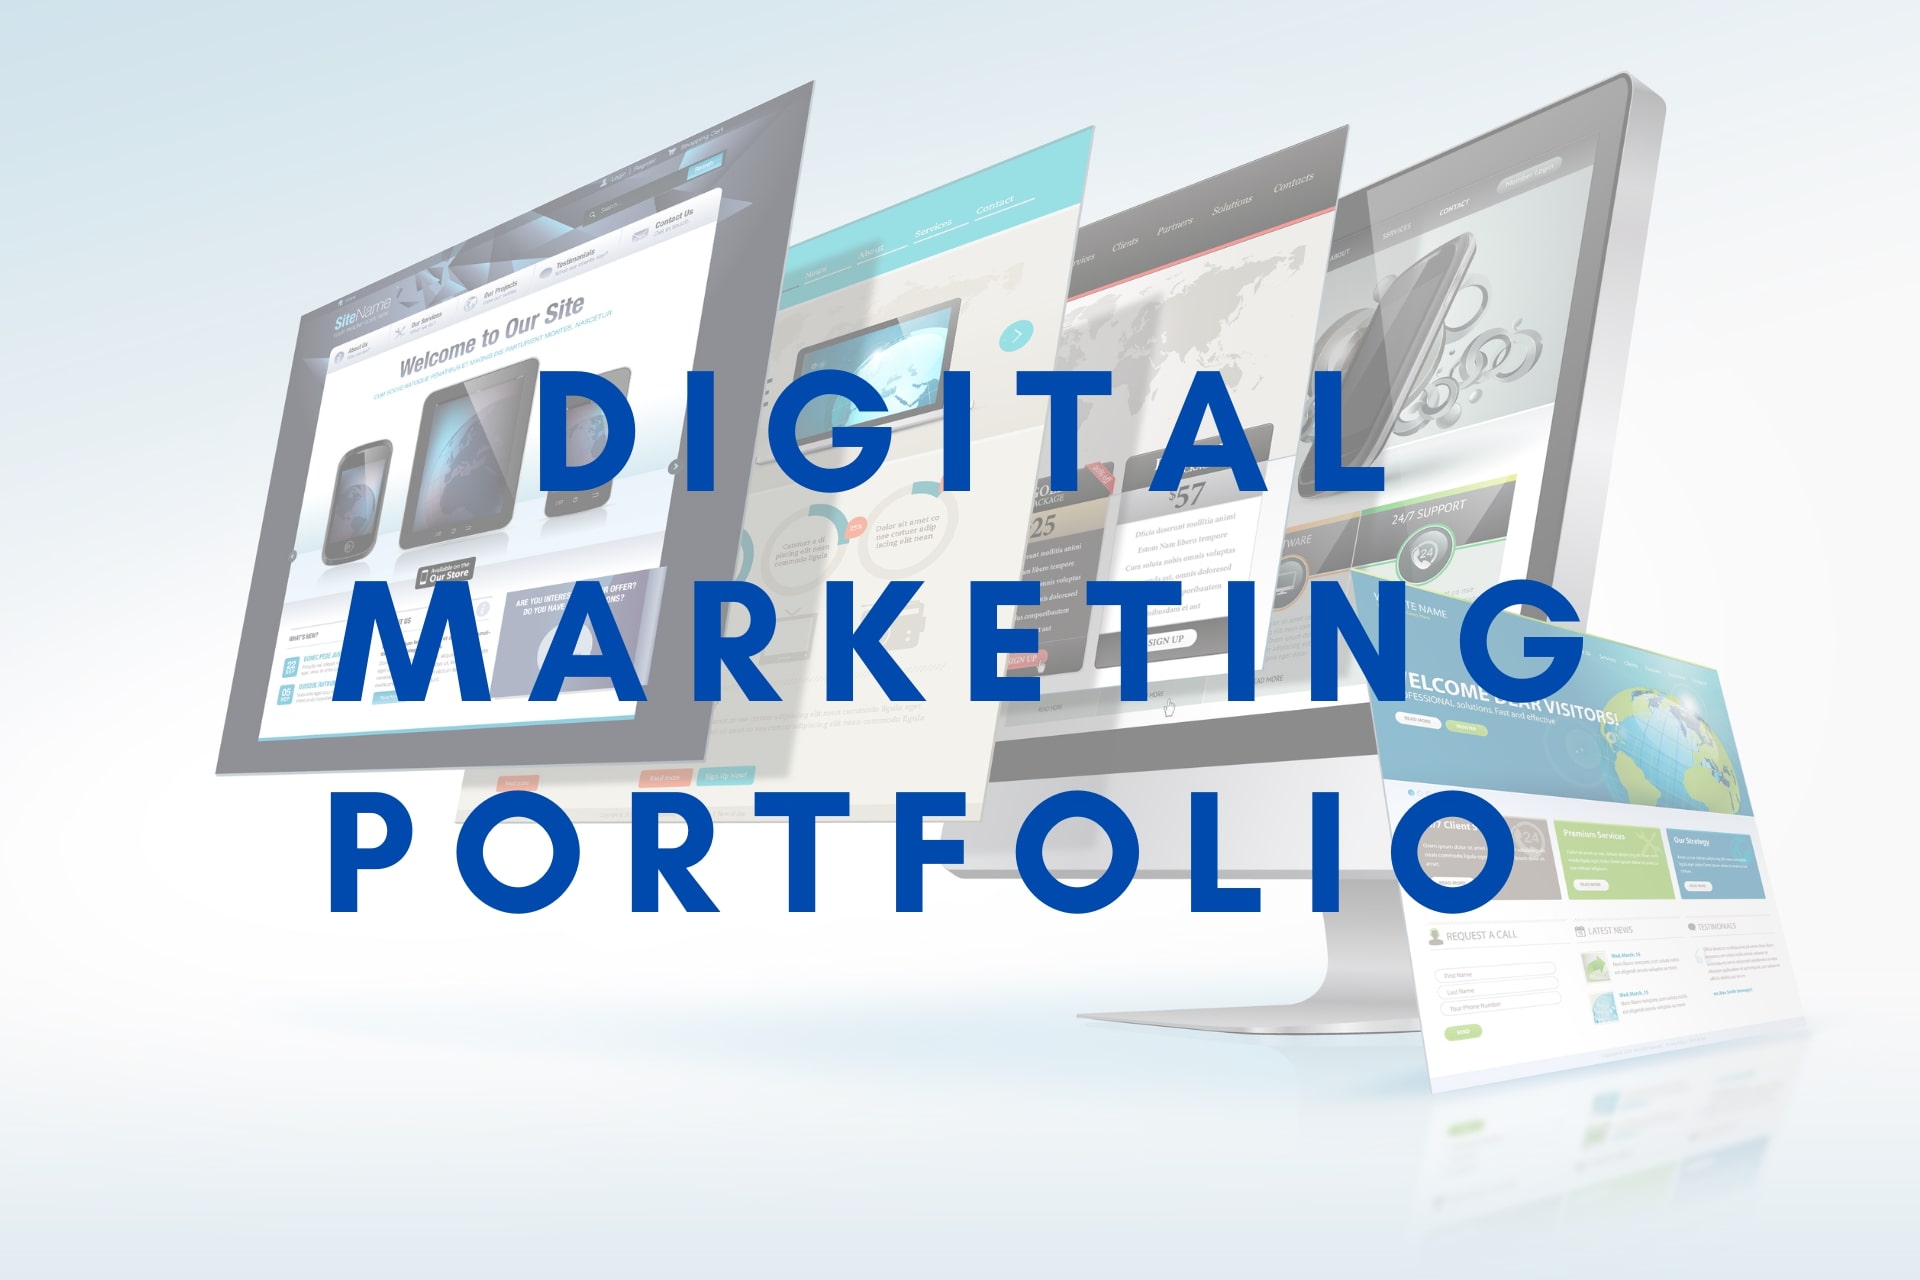 Digital-marketing-portfolio